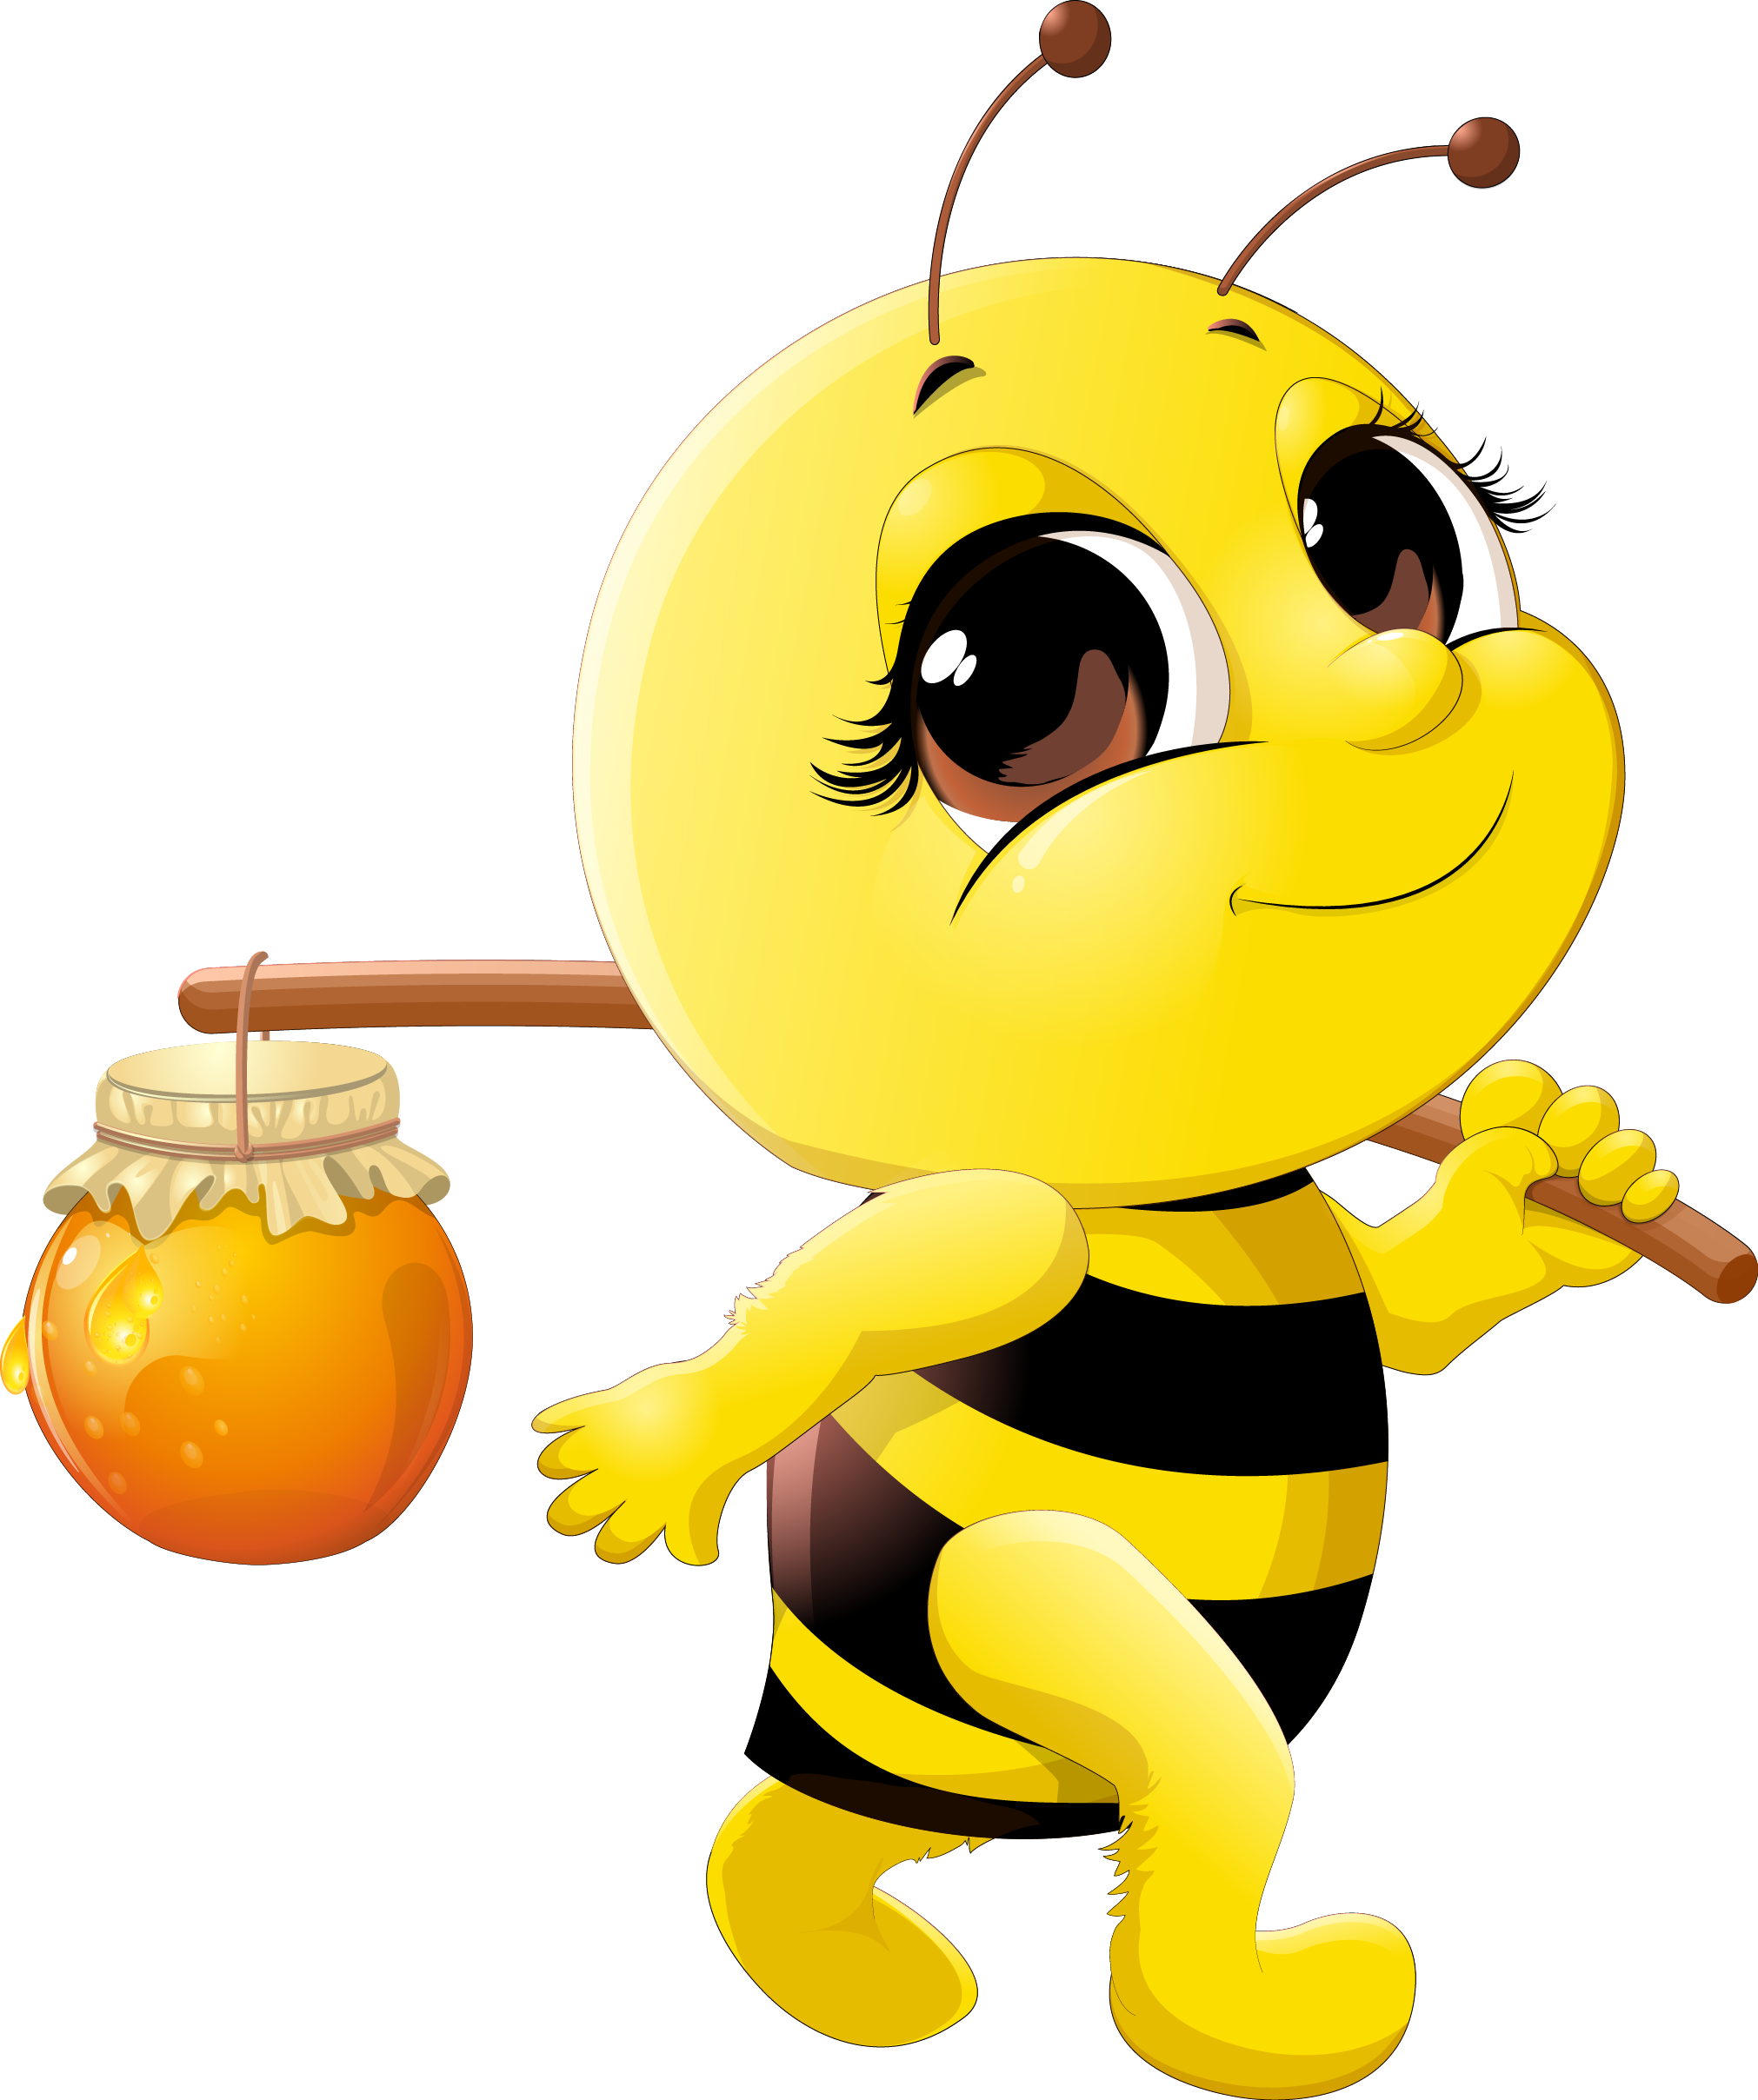 Honey Bee Cartoon Clip Art - My Life As A Honey Bee By Joyce A Wagner.